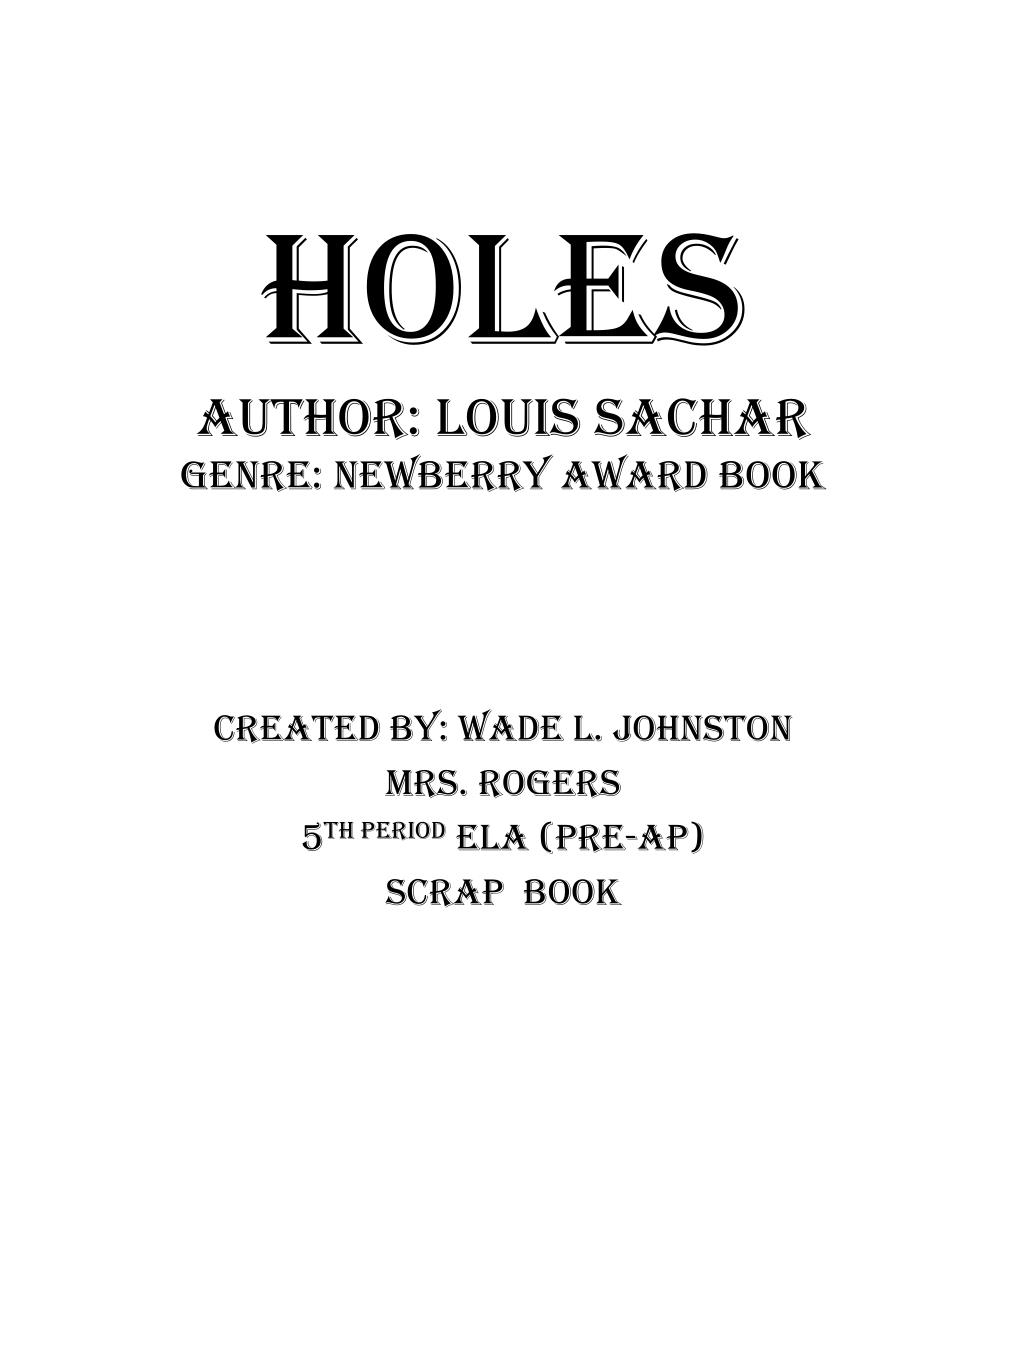 Louis Sachar, Authors